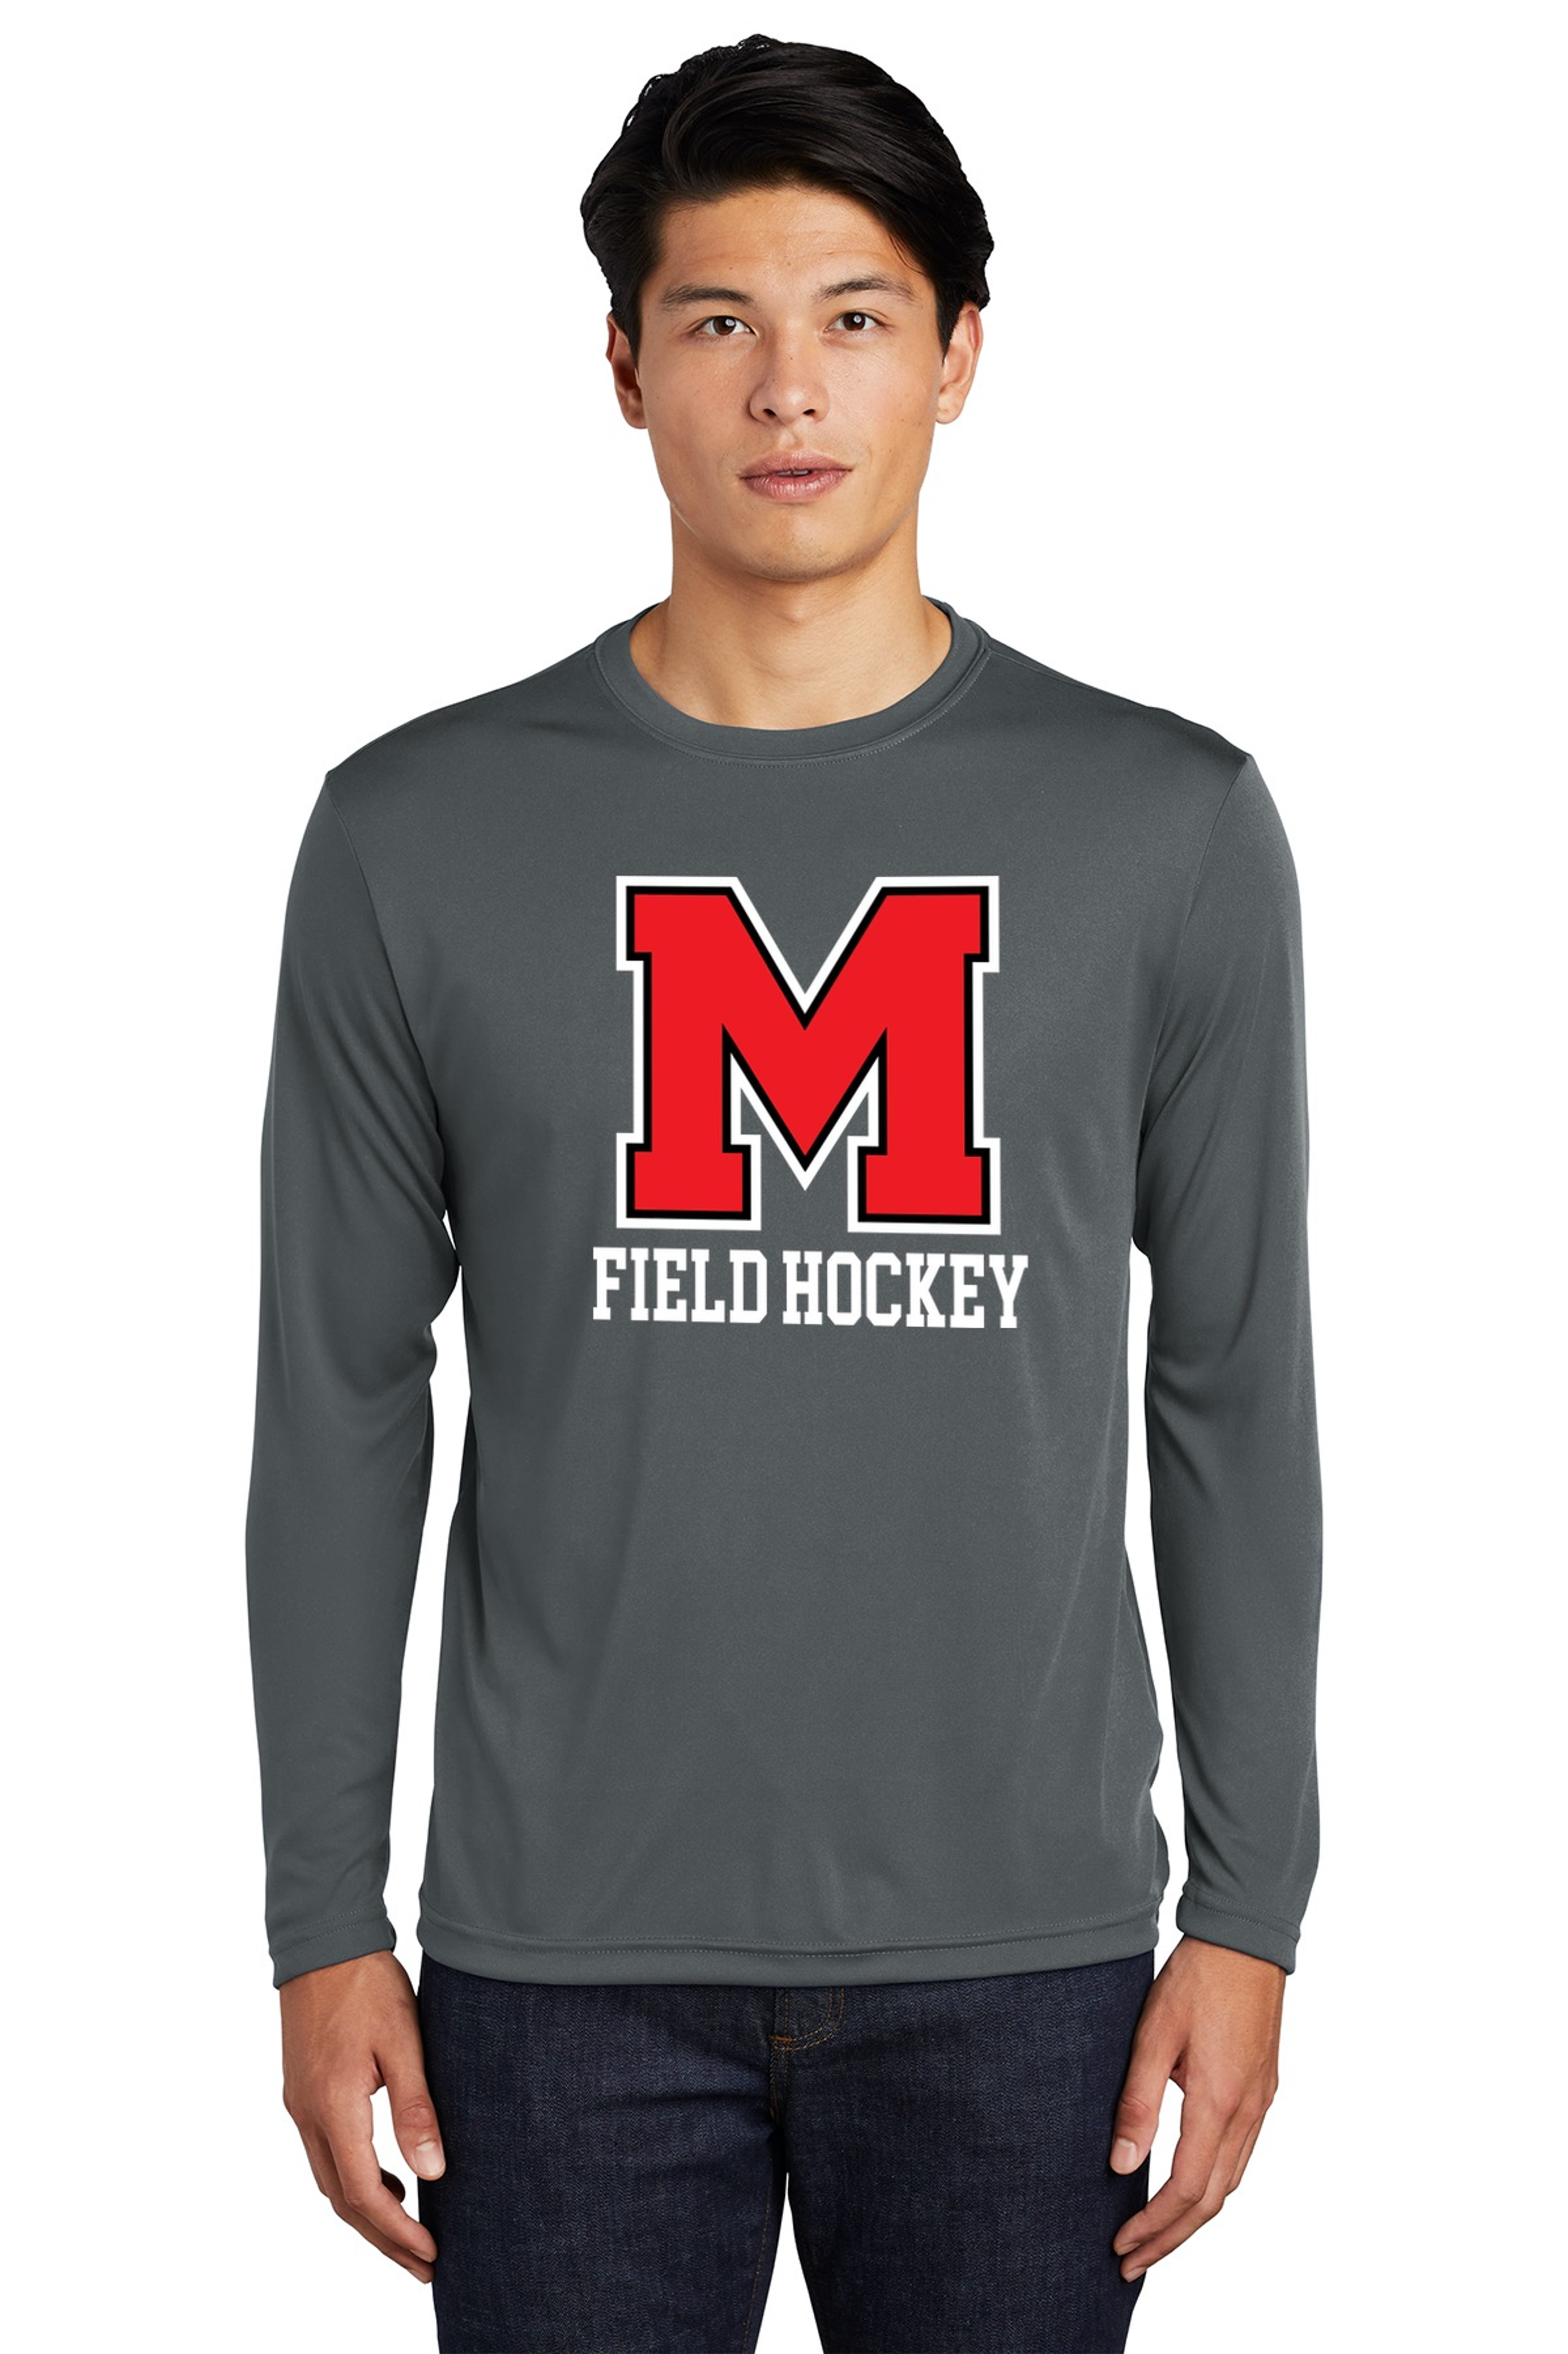 MHS Field Hockey Long Sleeve Performance Shirt